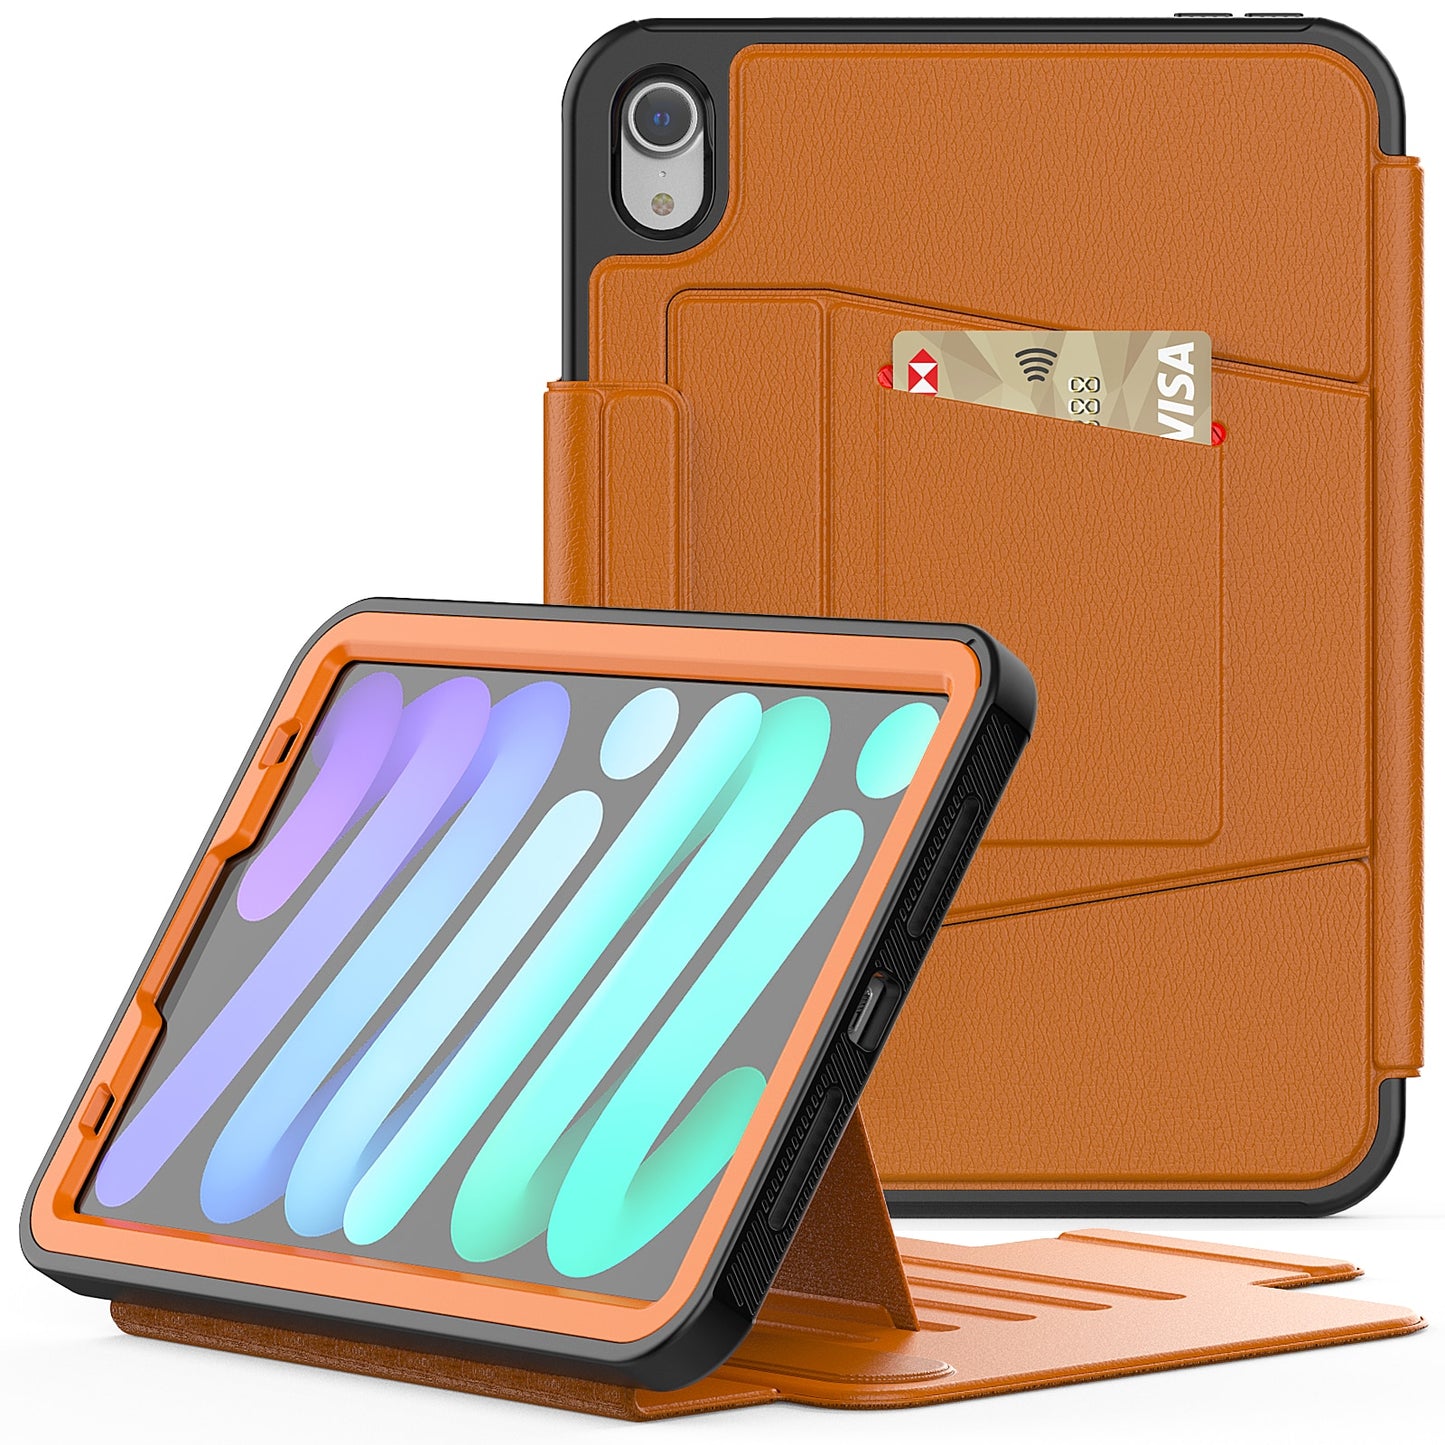 iPad Mini Leather Cover Case Best Design